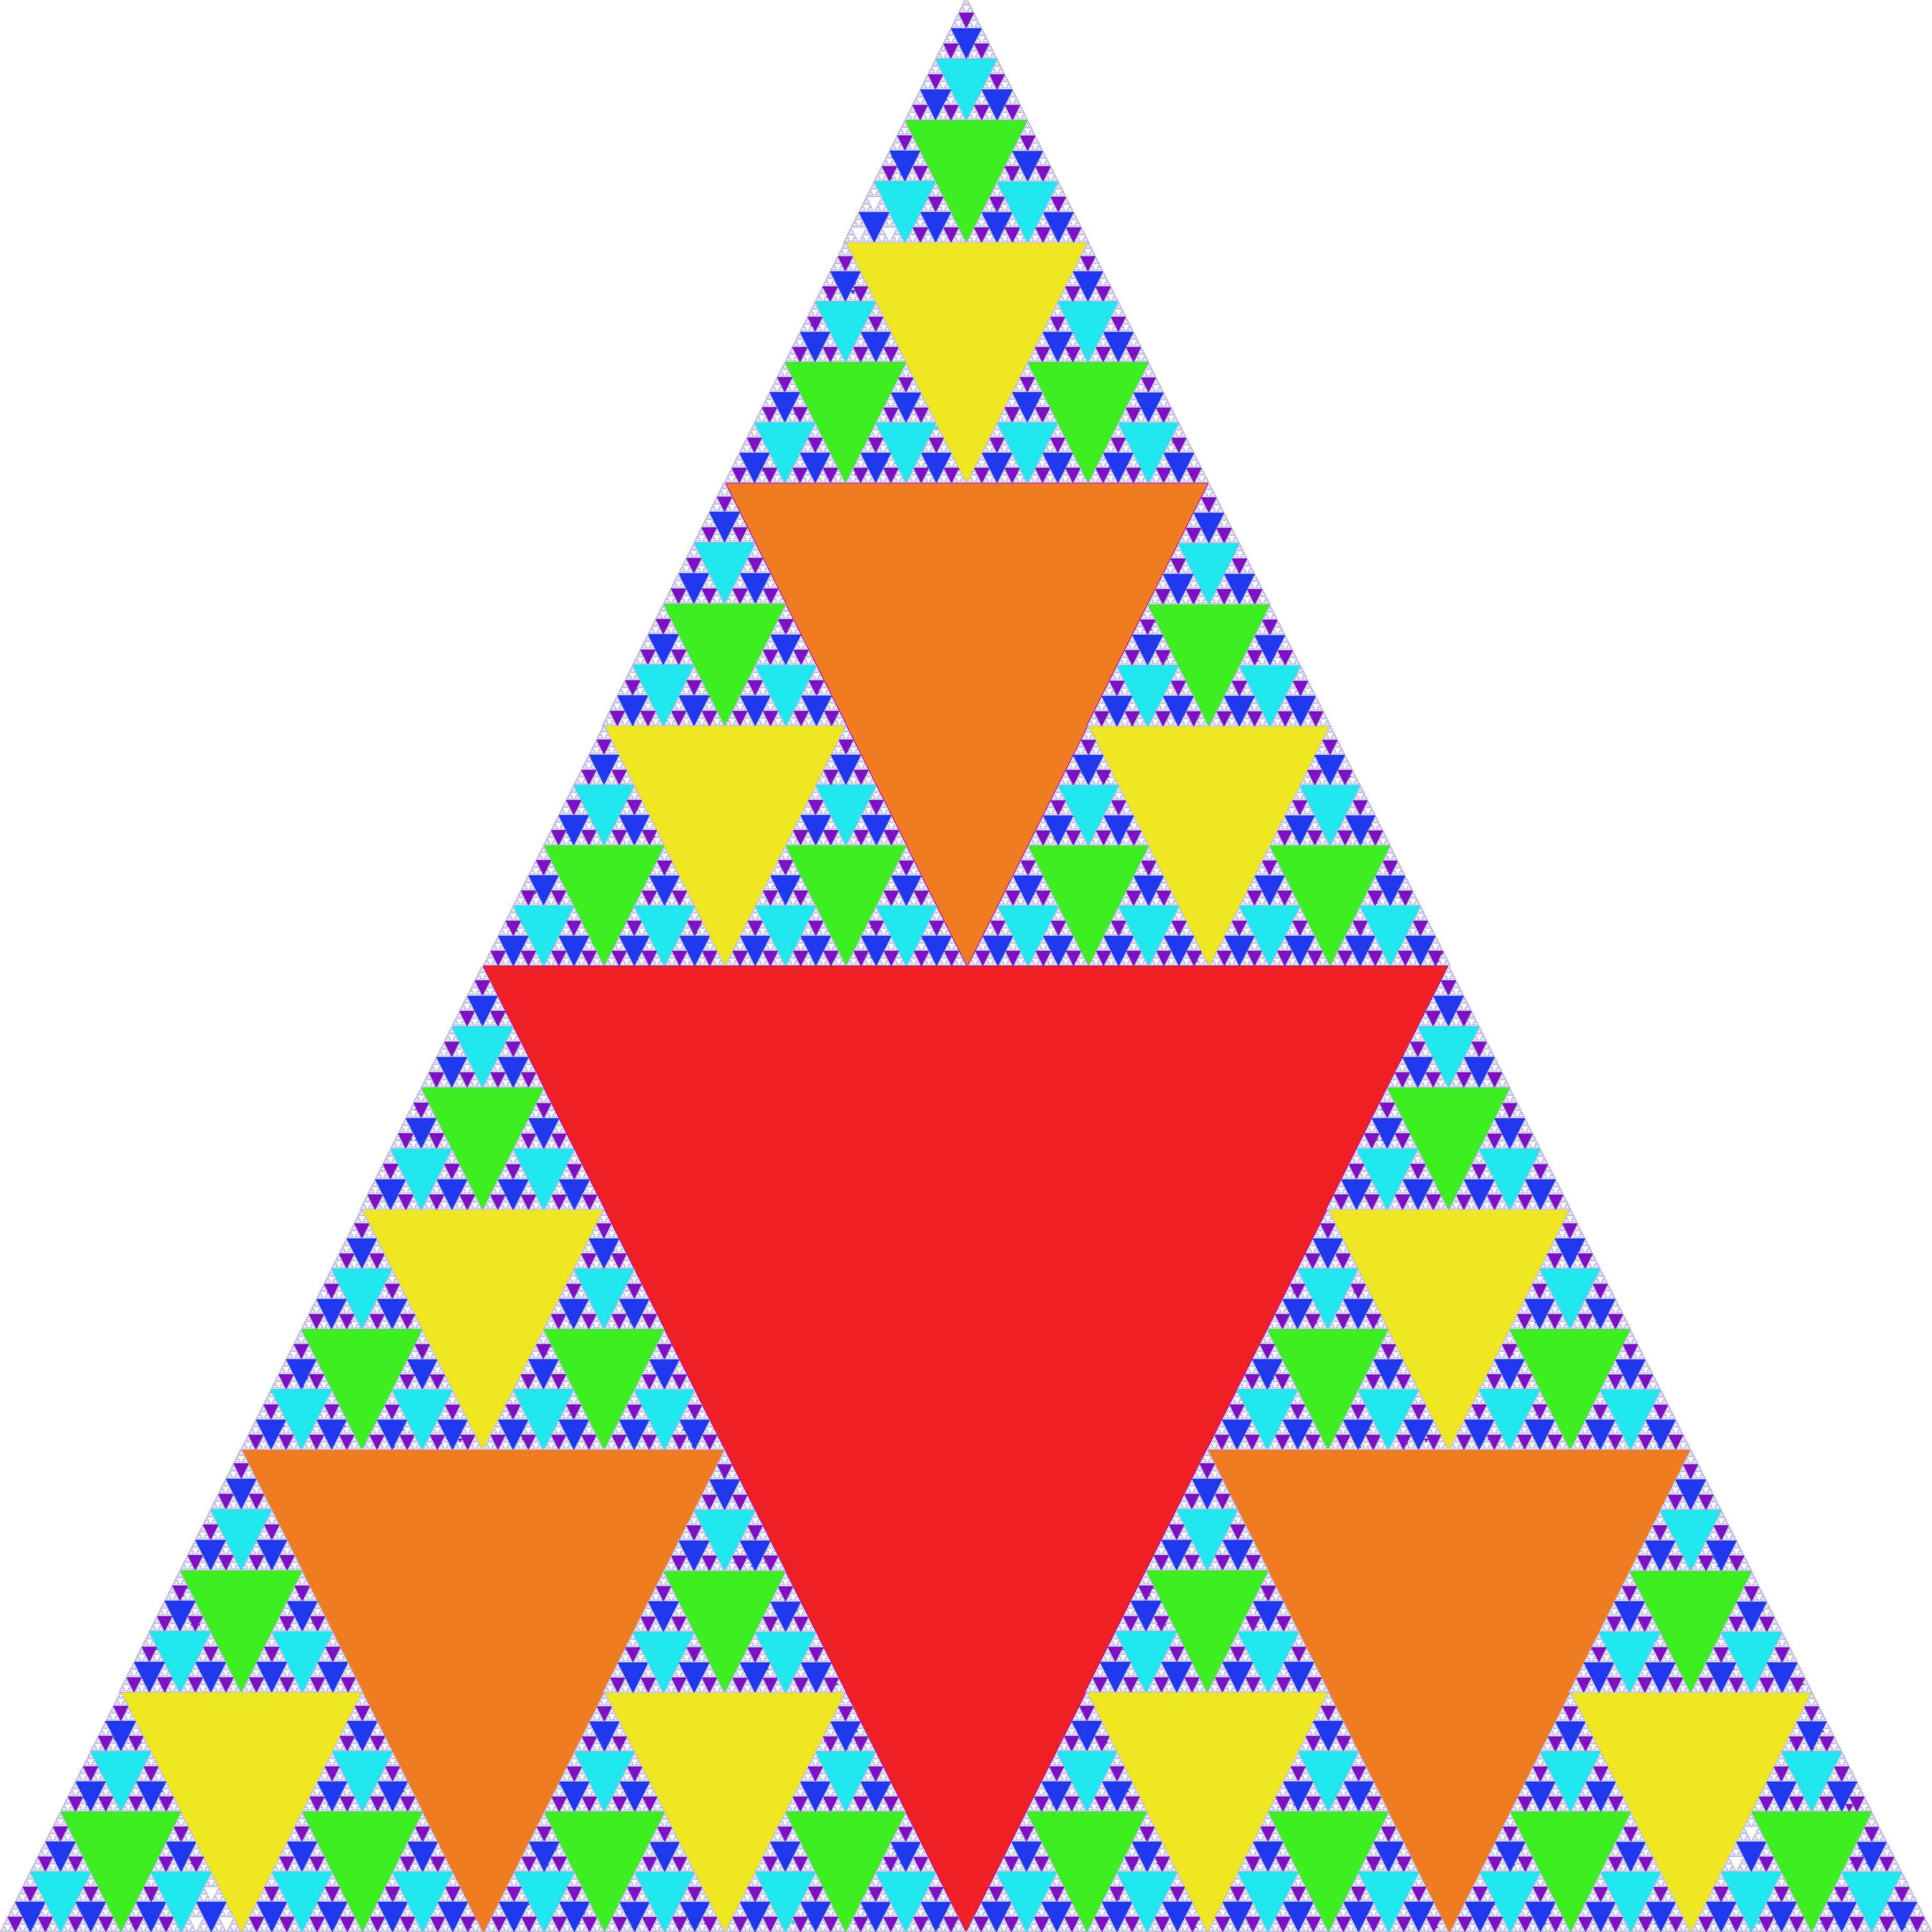 Orange Upside Down Triangle Logo - Upside Down Triangles. Oser69's Blog